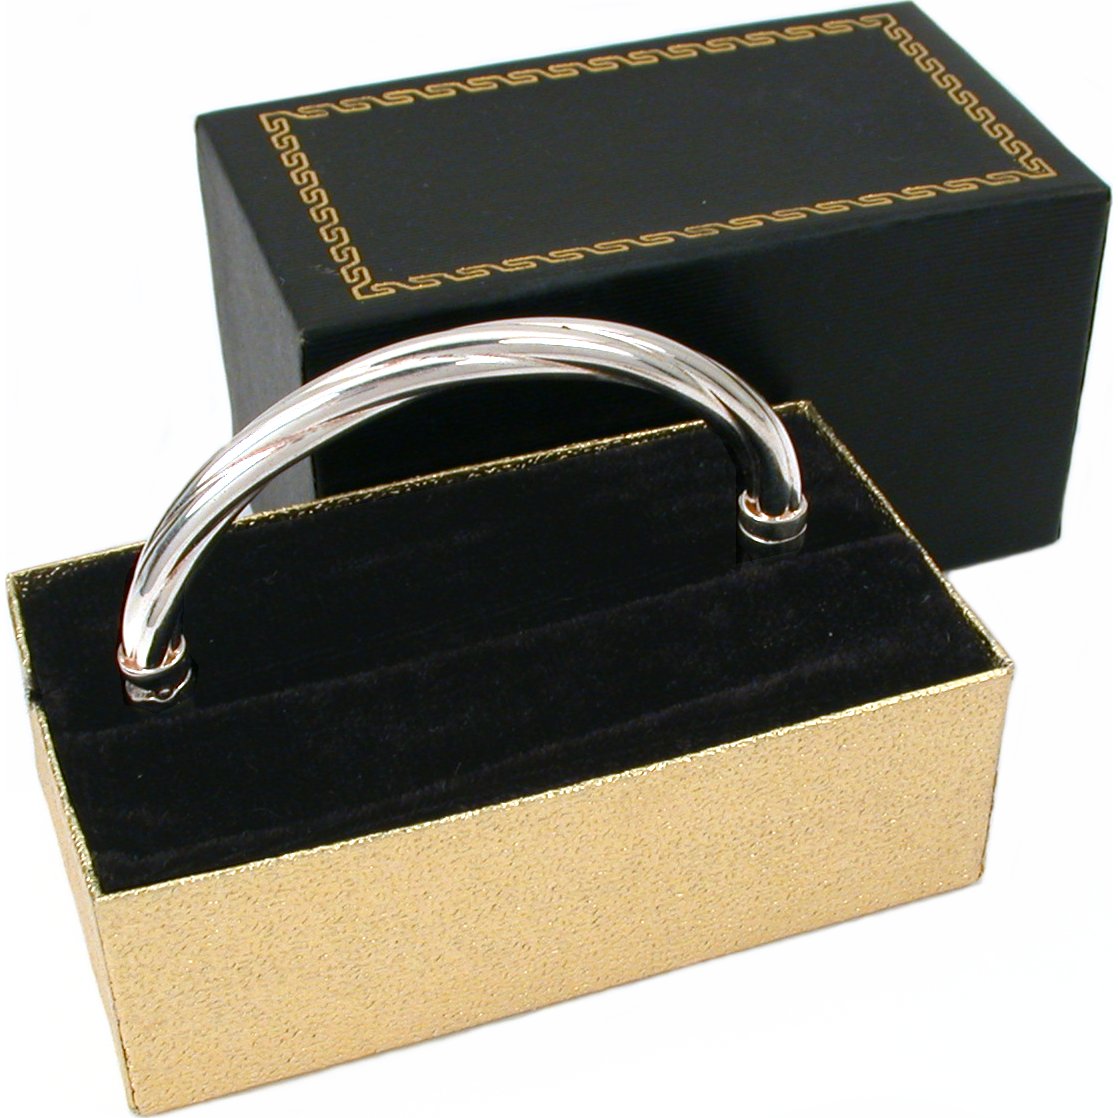 Bangle Bracelet Gift Box Black & Gold 2 1/2" (Only 1 Box)